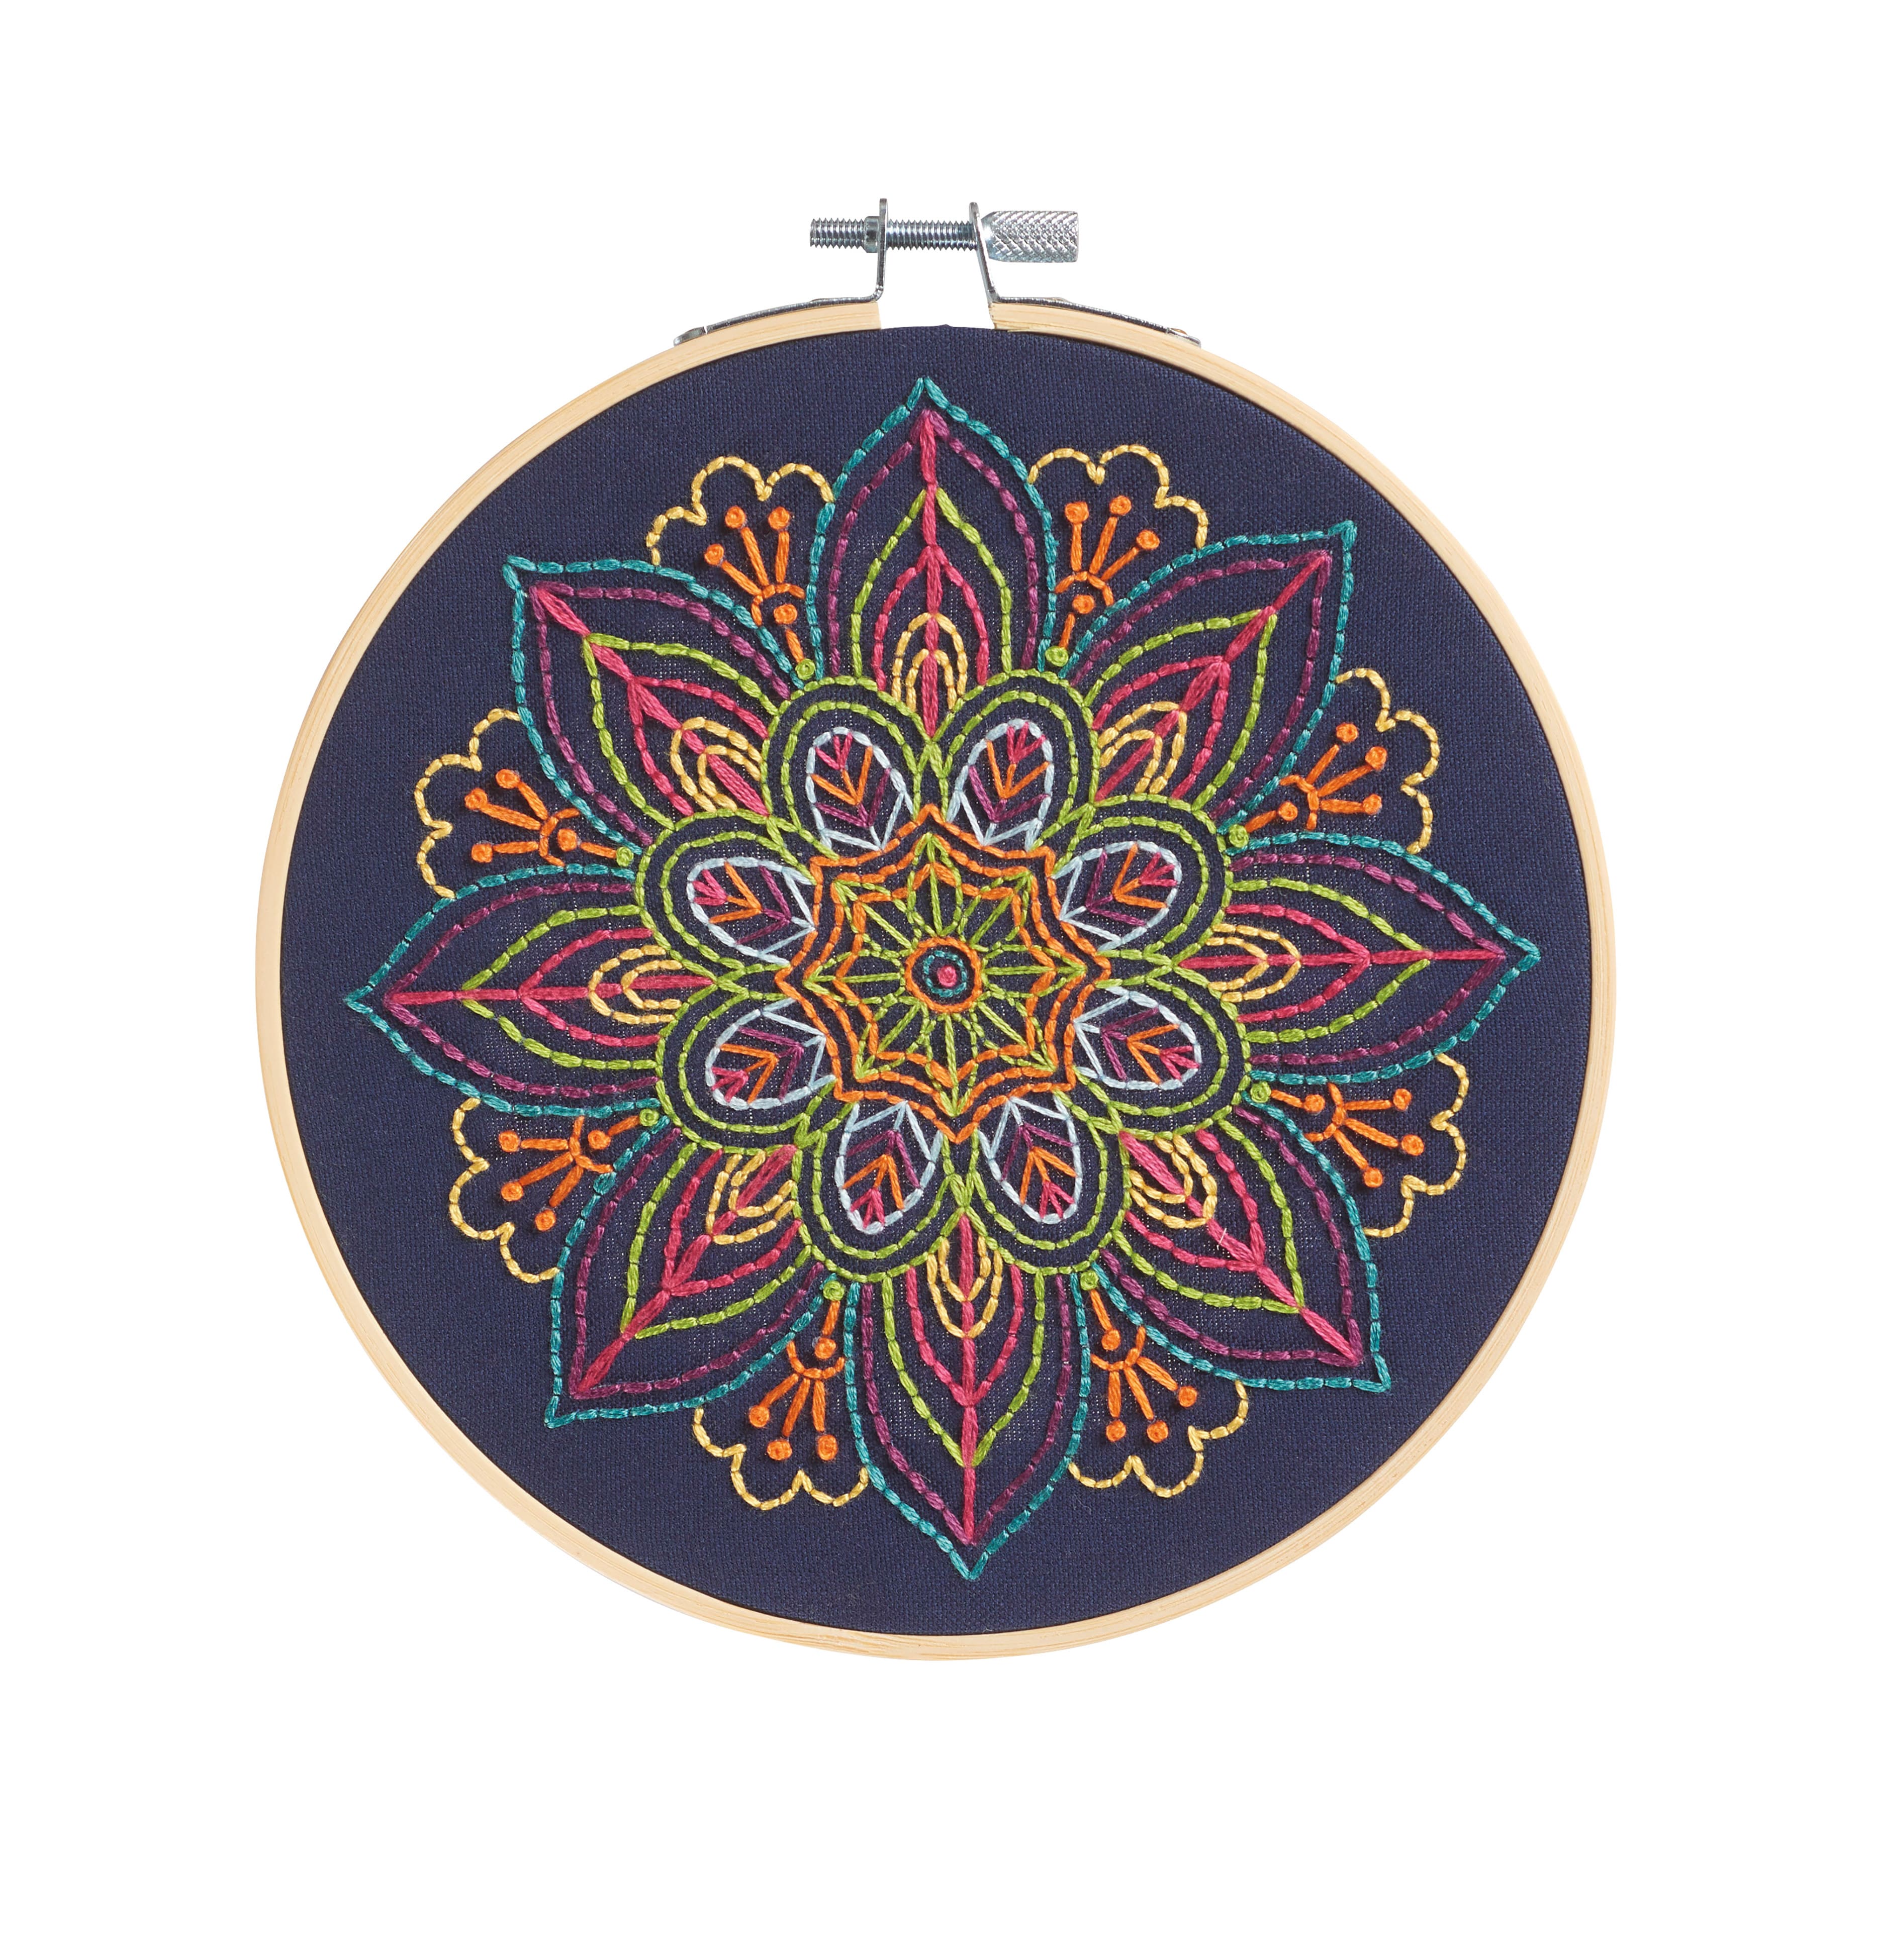 Embroidery & Crewel Kits